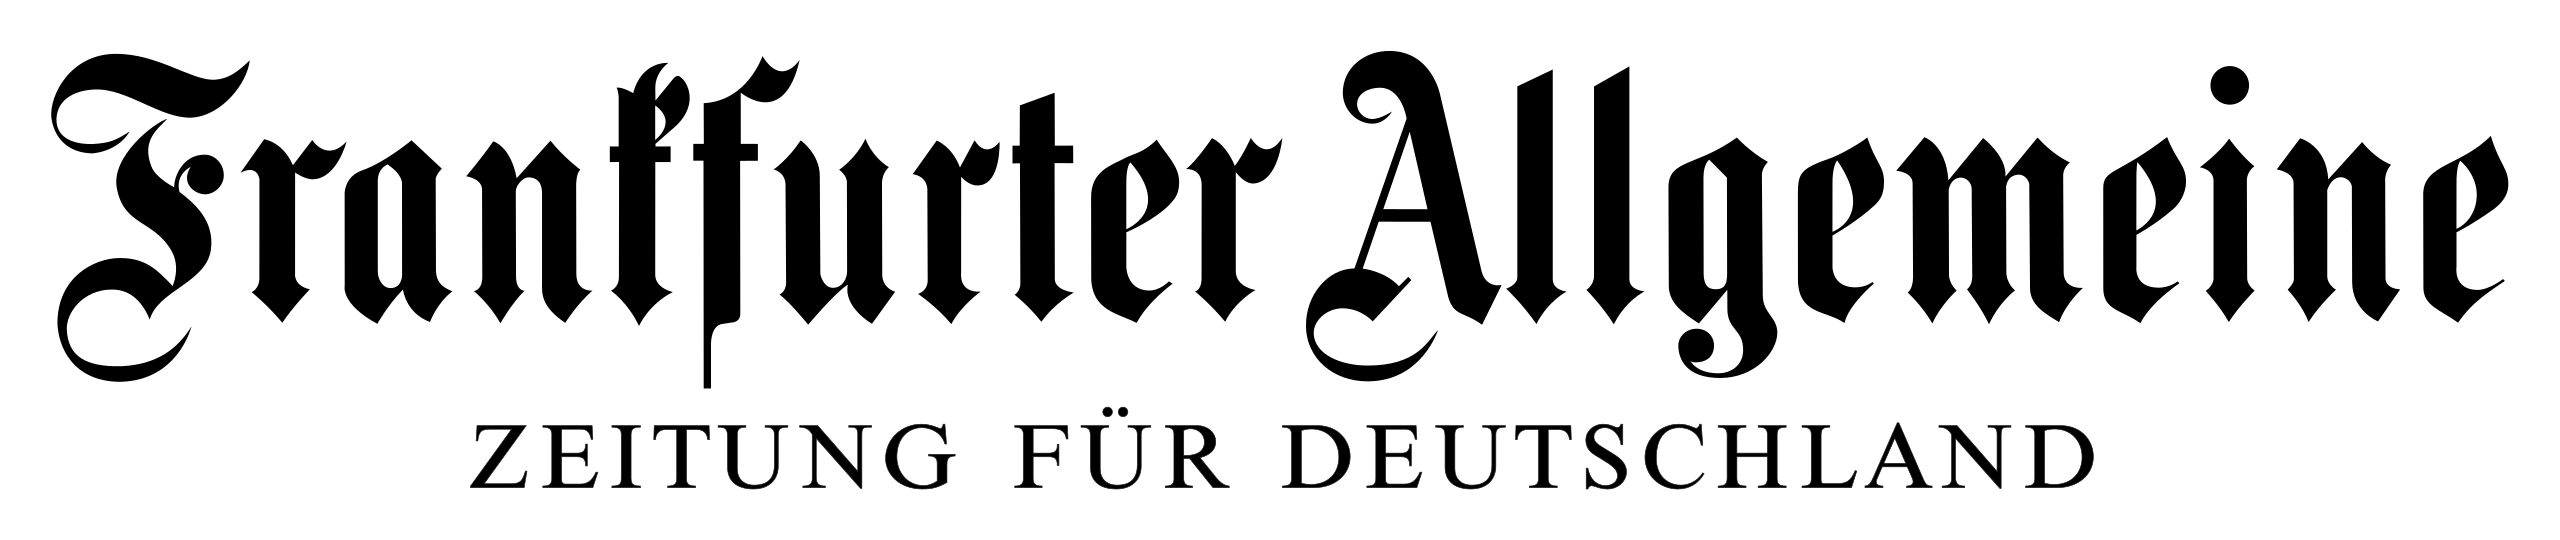 Frankfurter Allgemeine official logo